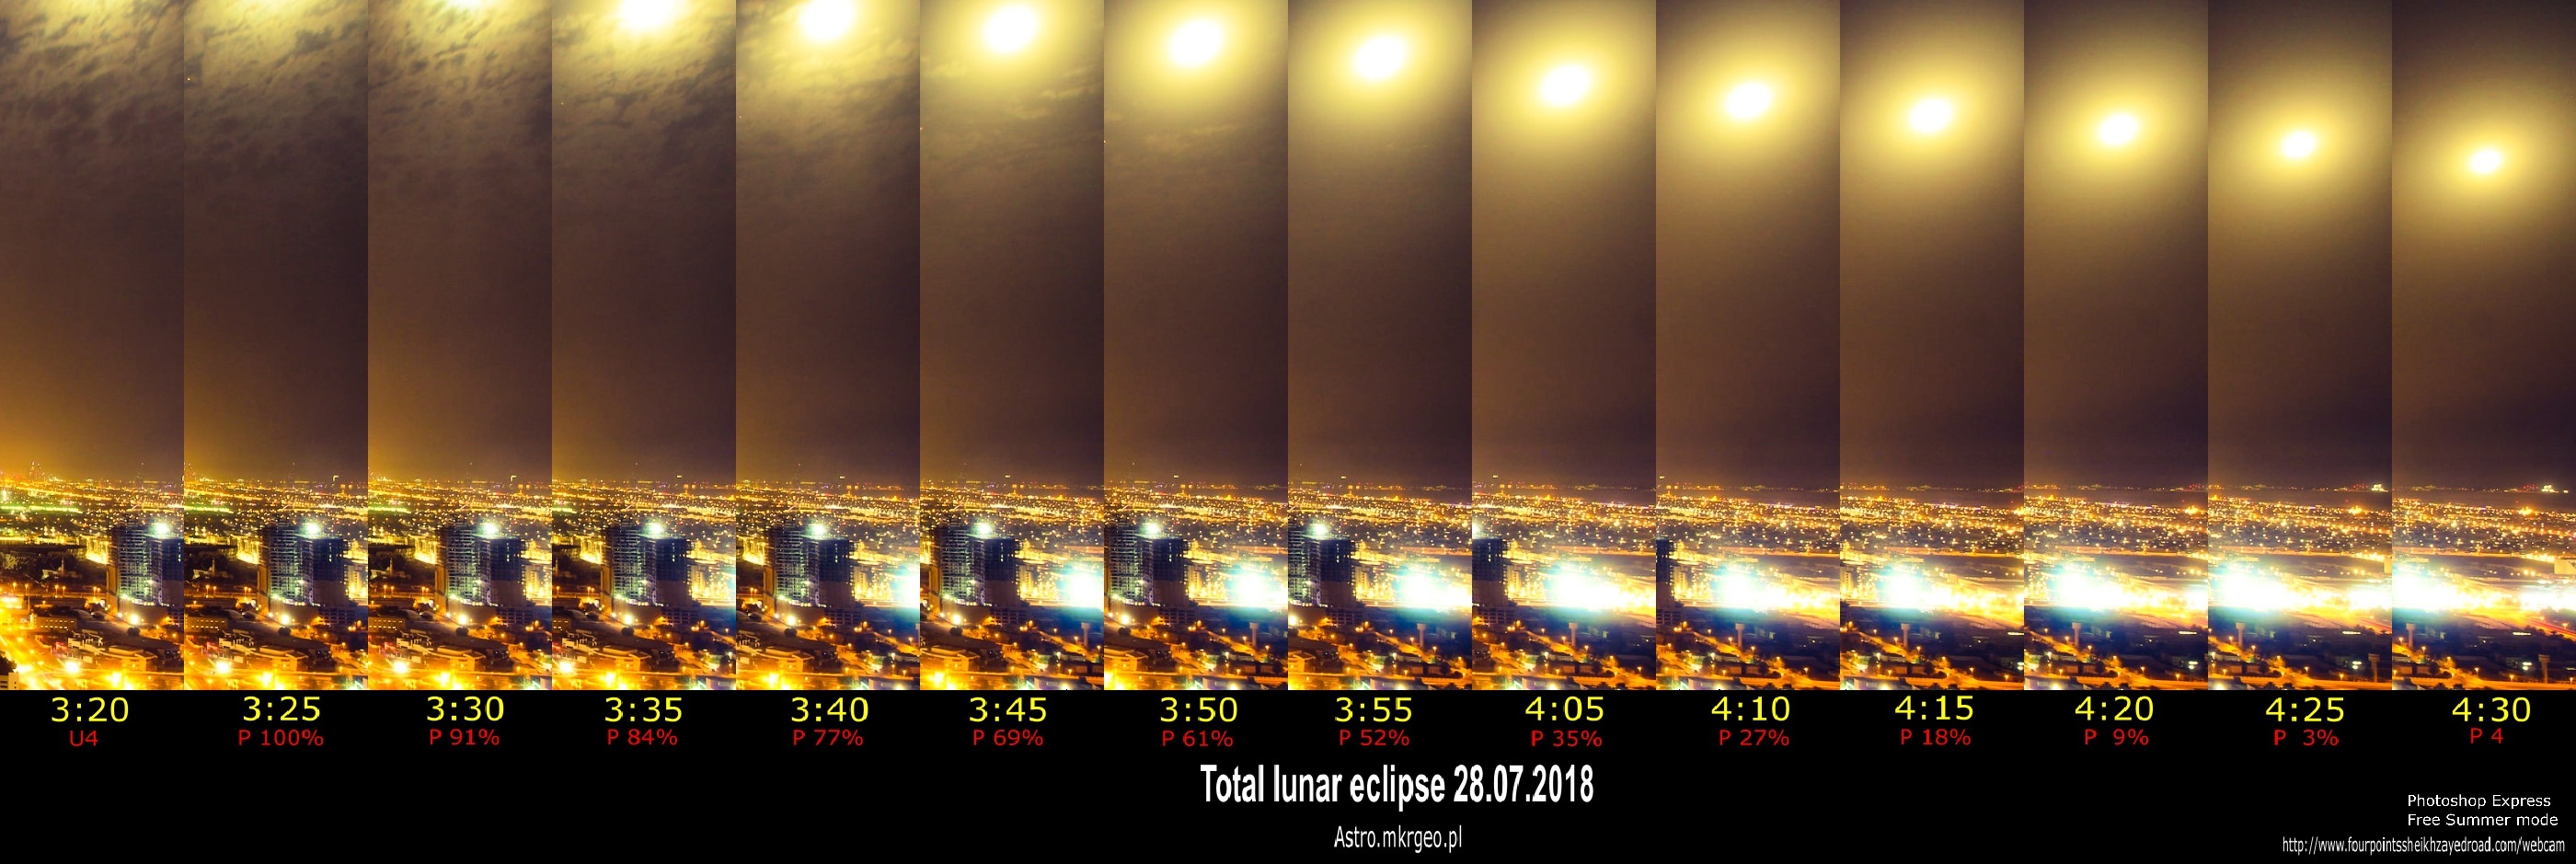 2018 total lunar eclipse in Dubai webcam compilation prenumbral phase Photoshop Express